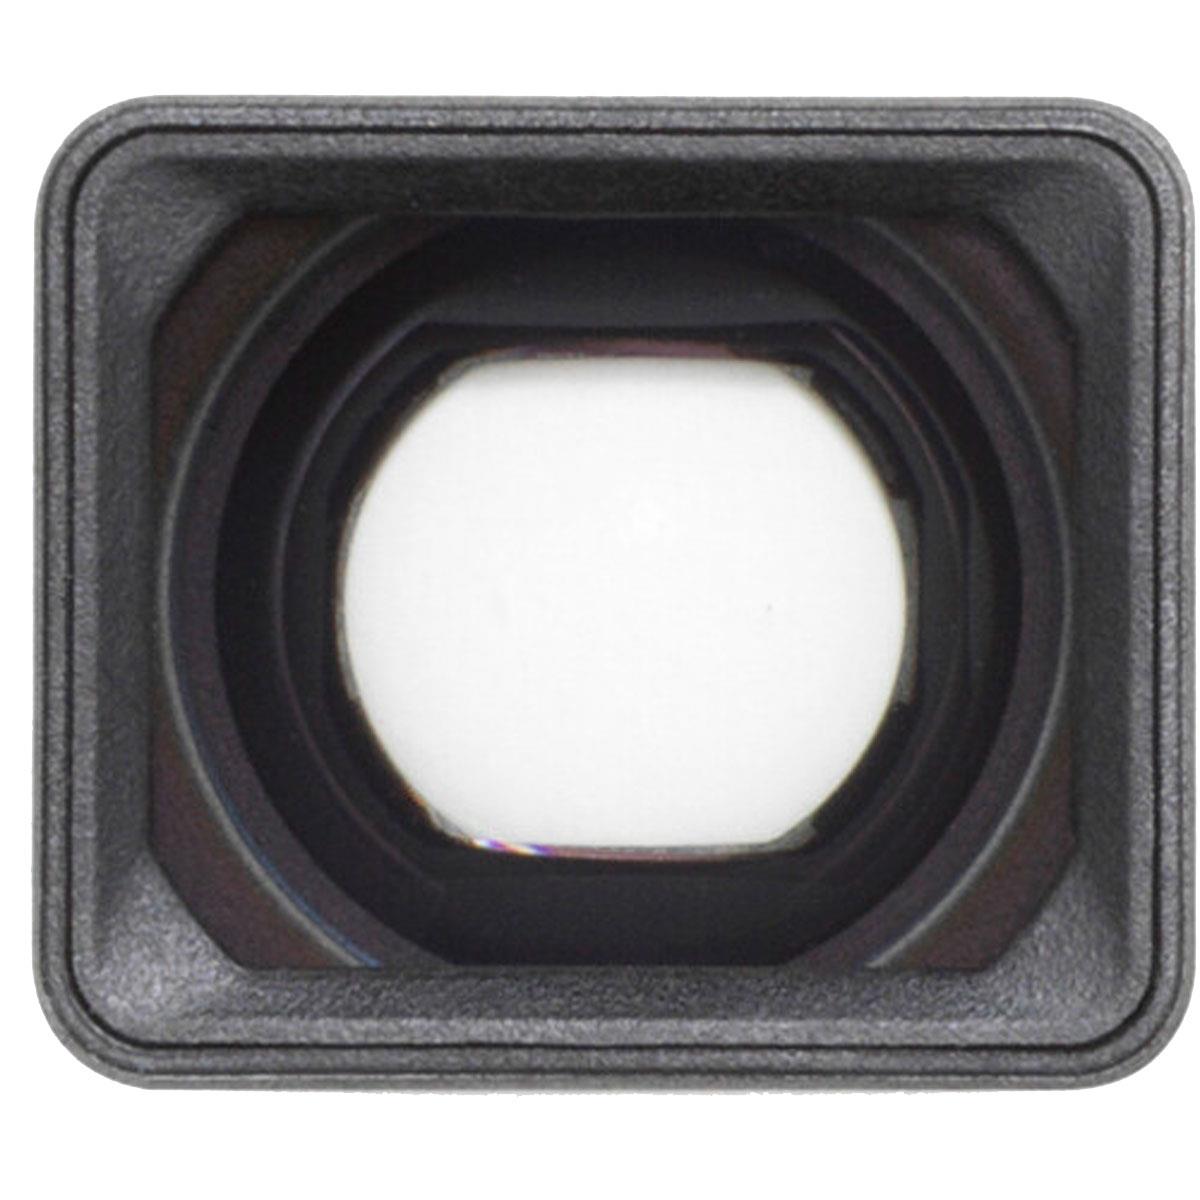 Image of DJI Pocket 2 Wide-Angle Lens